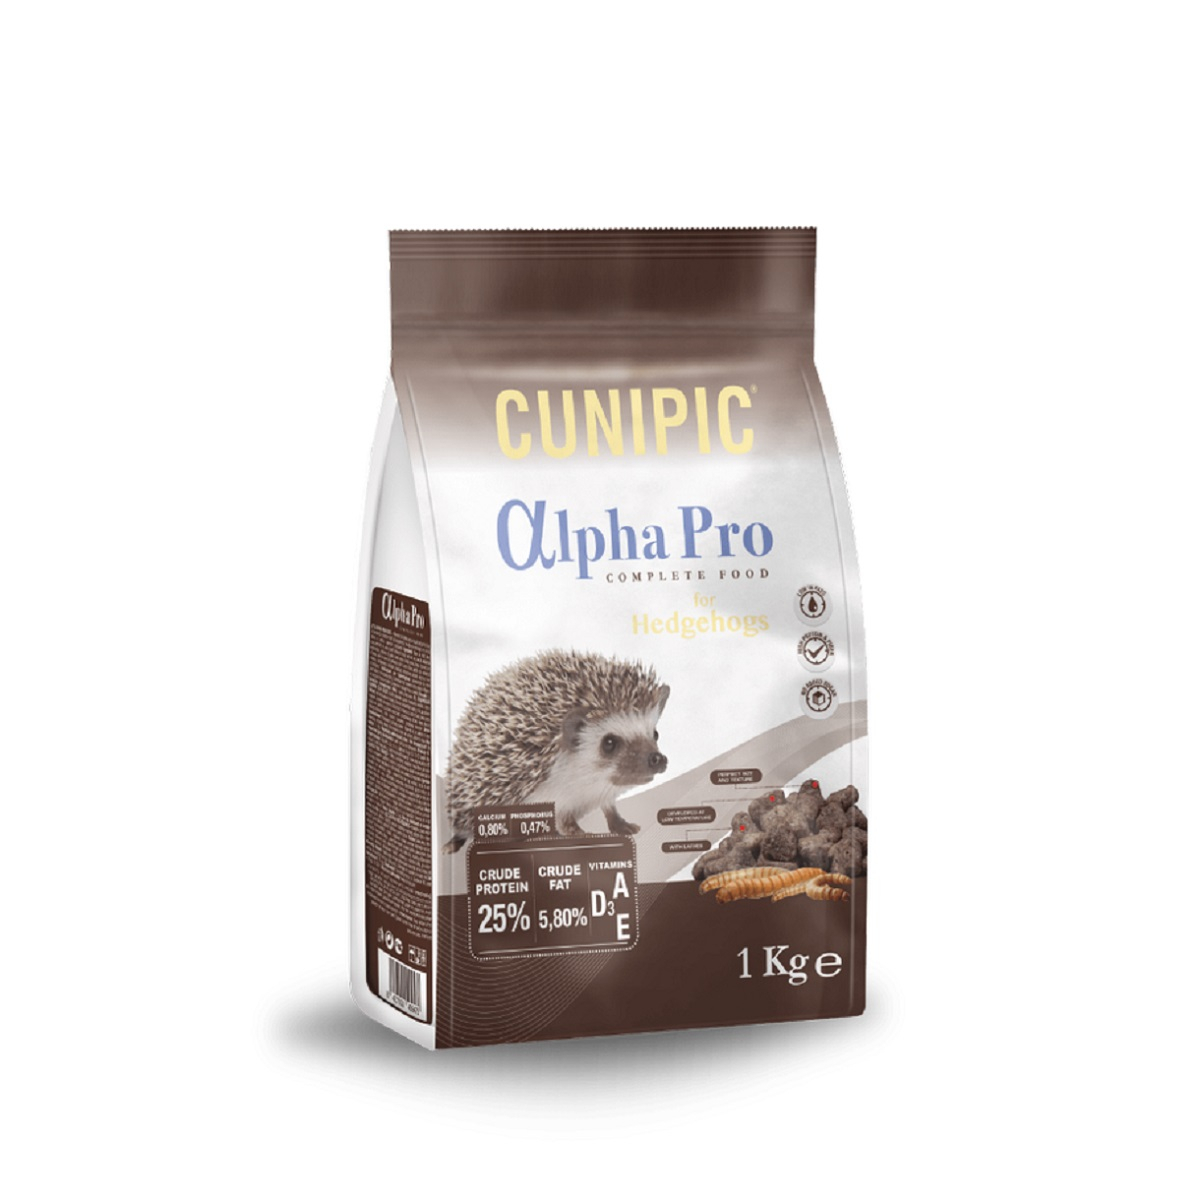 Cunipic Alpha Pro Complete Food Igel